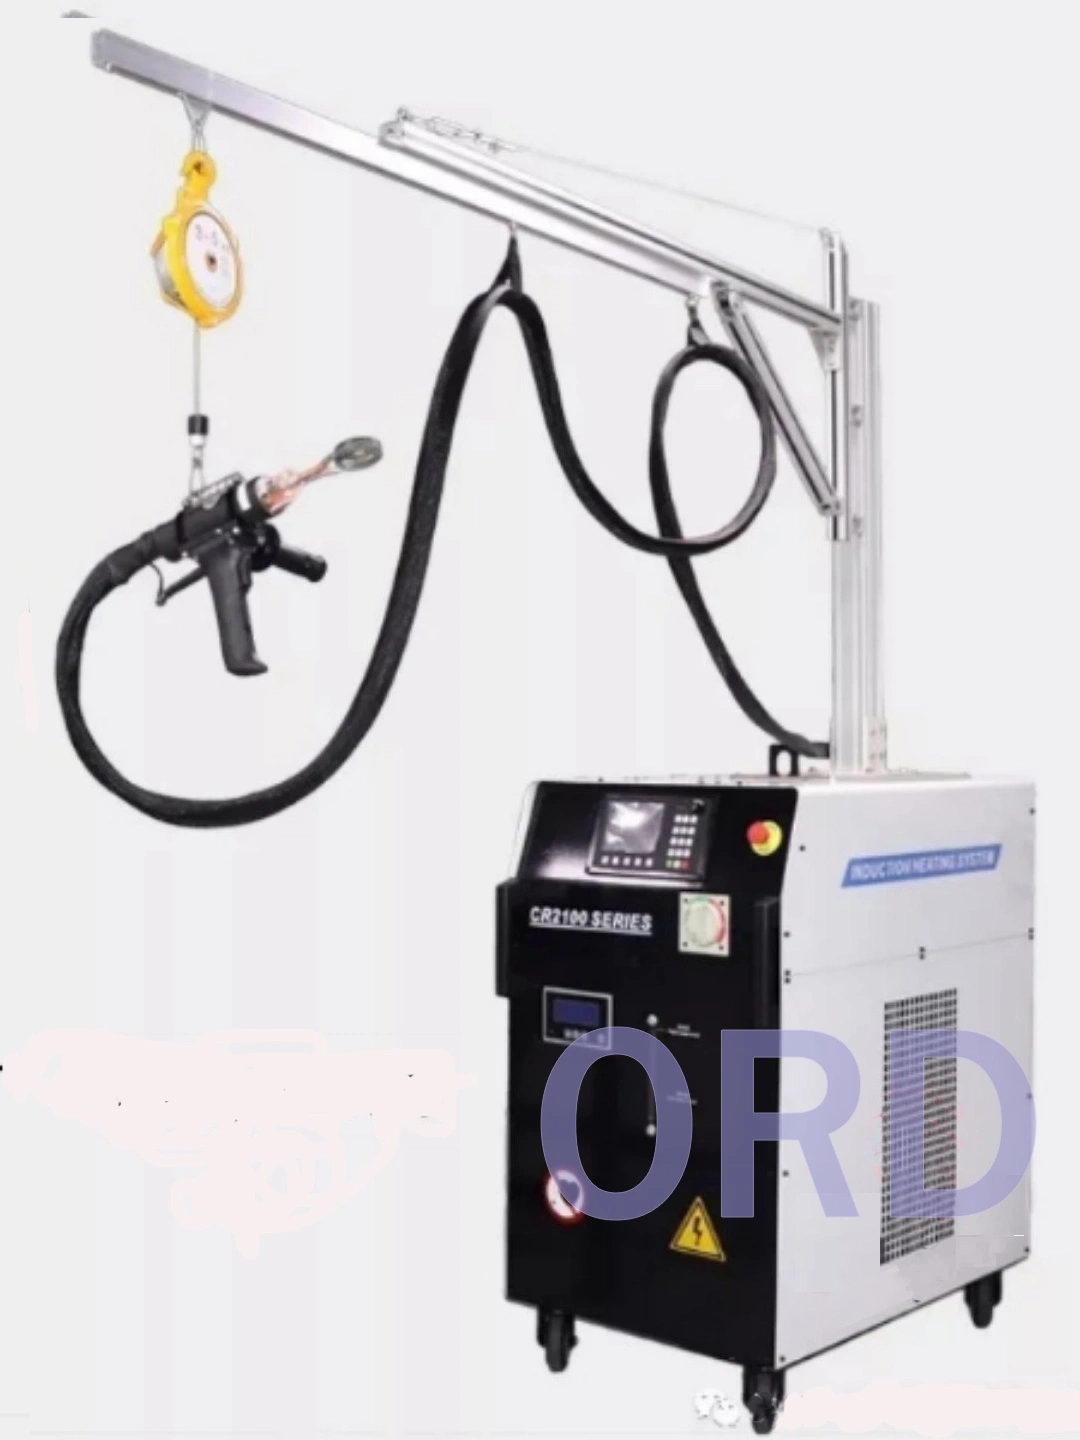 Ord-50kw Full Digital Integrate Handle Type Induction Heating Machine